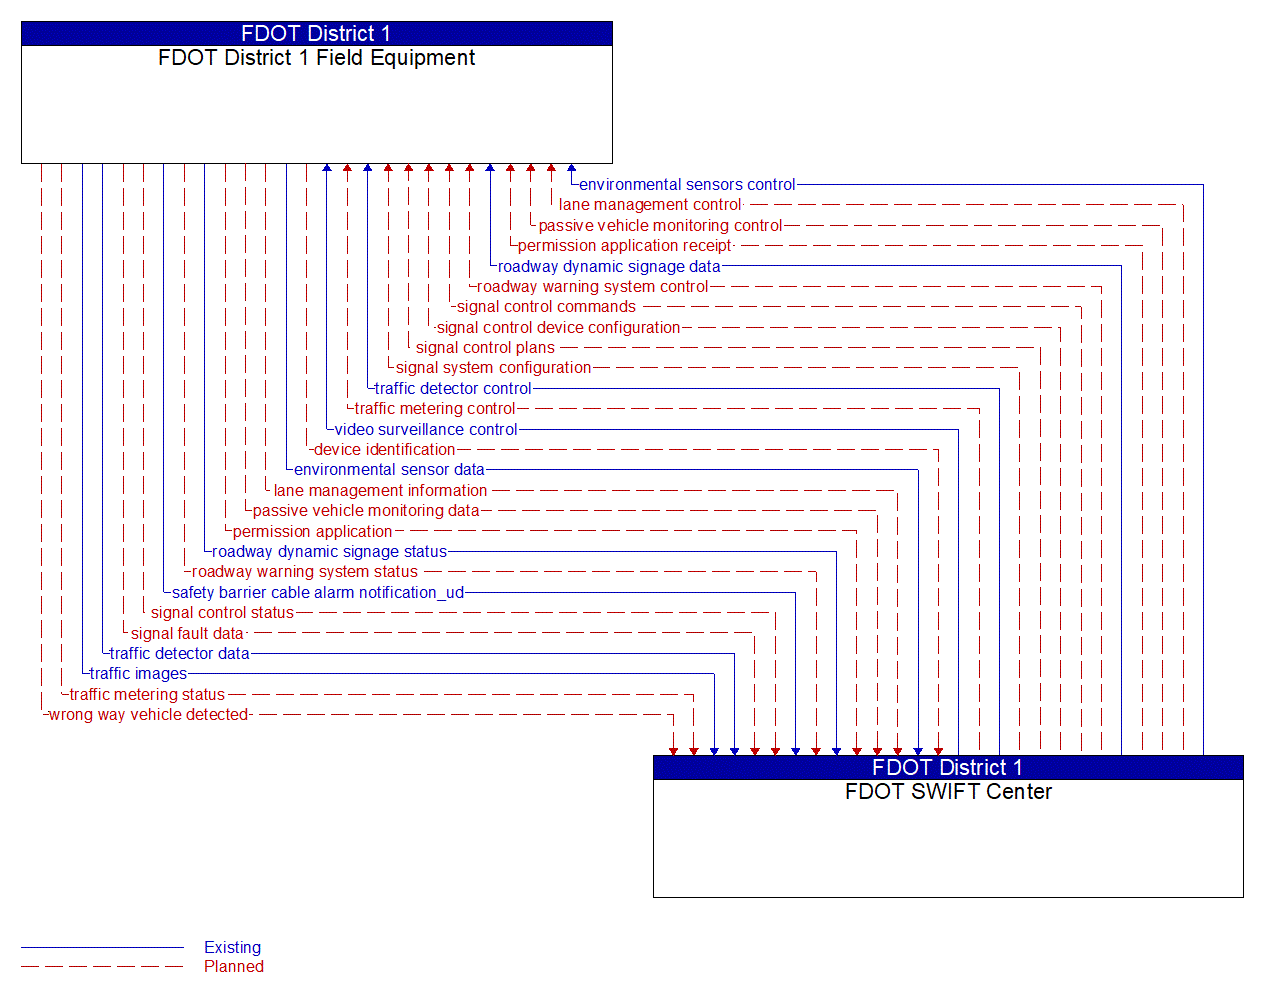 Architecture Flow Diagram: FDOT SWIFT Center <--> FDOT District 1 Field Equipment